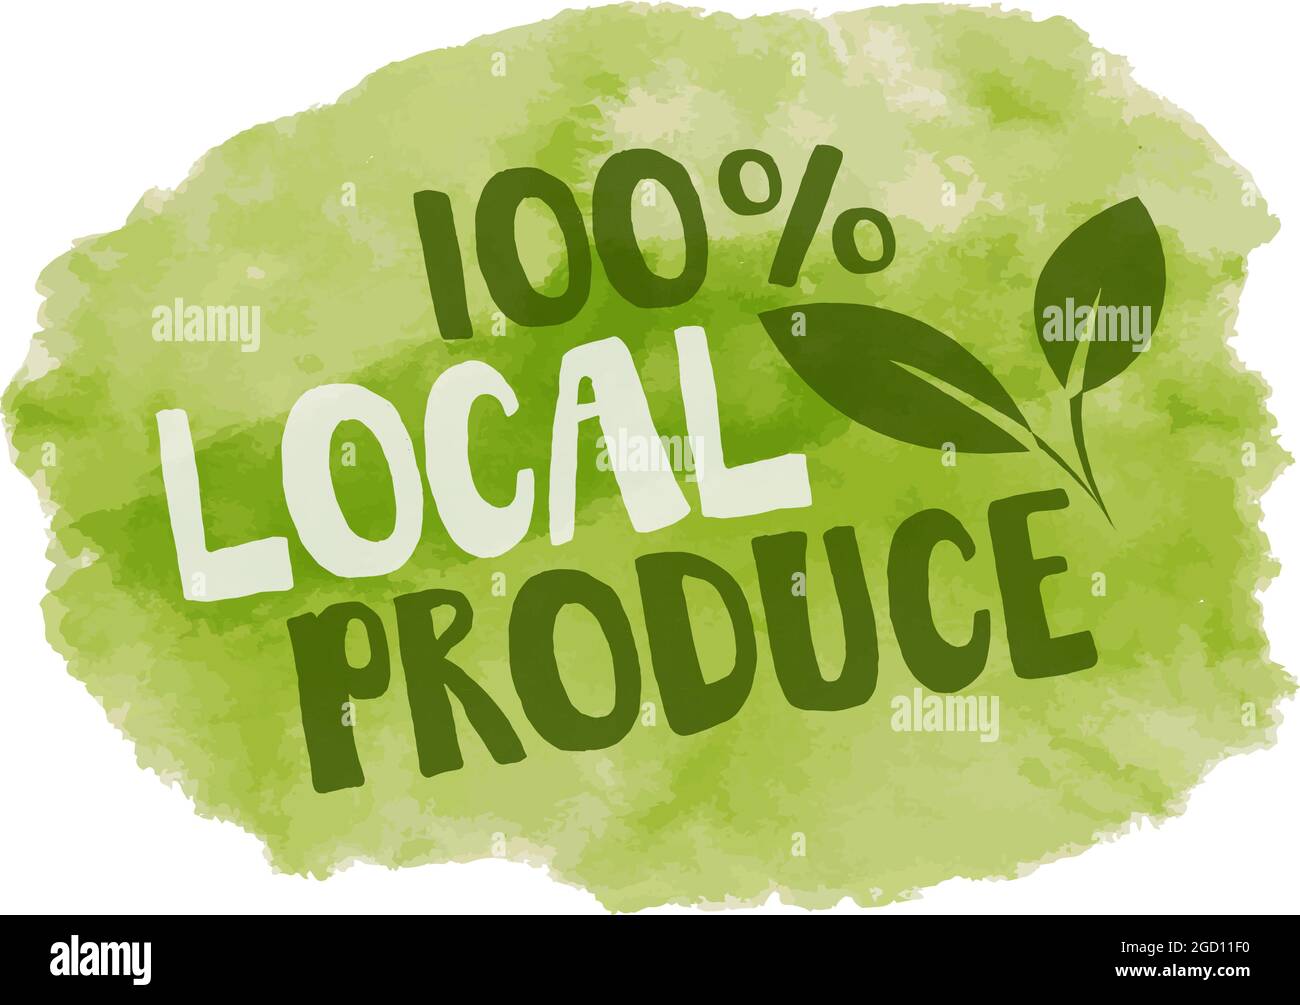 100 percent local produce label, green watercolor vector illustration Stock Vector